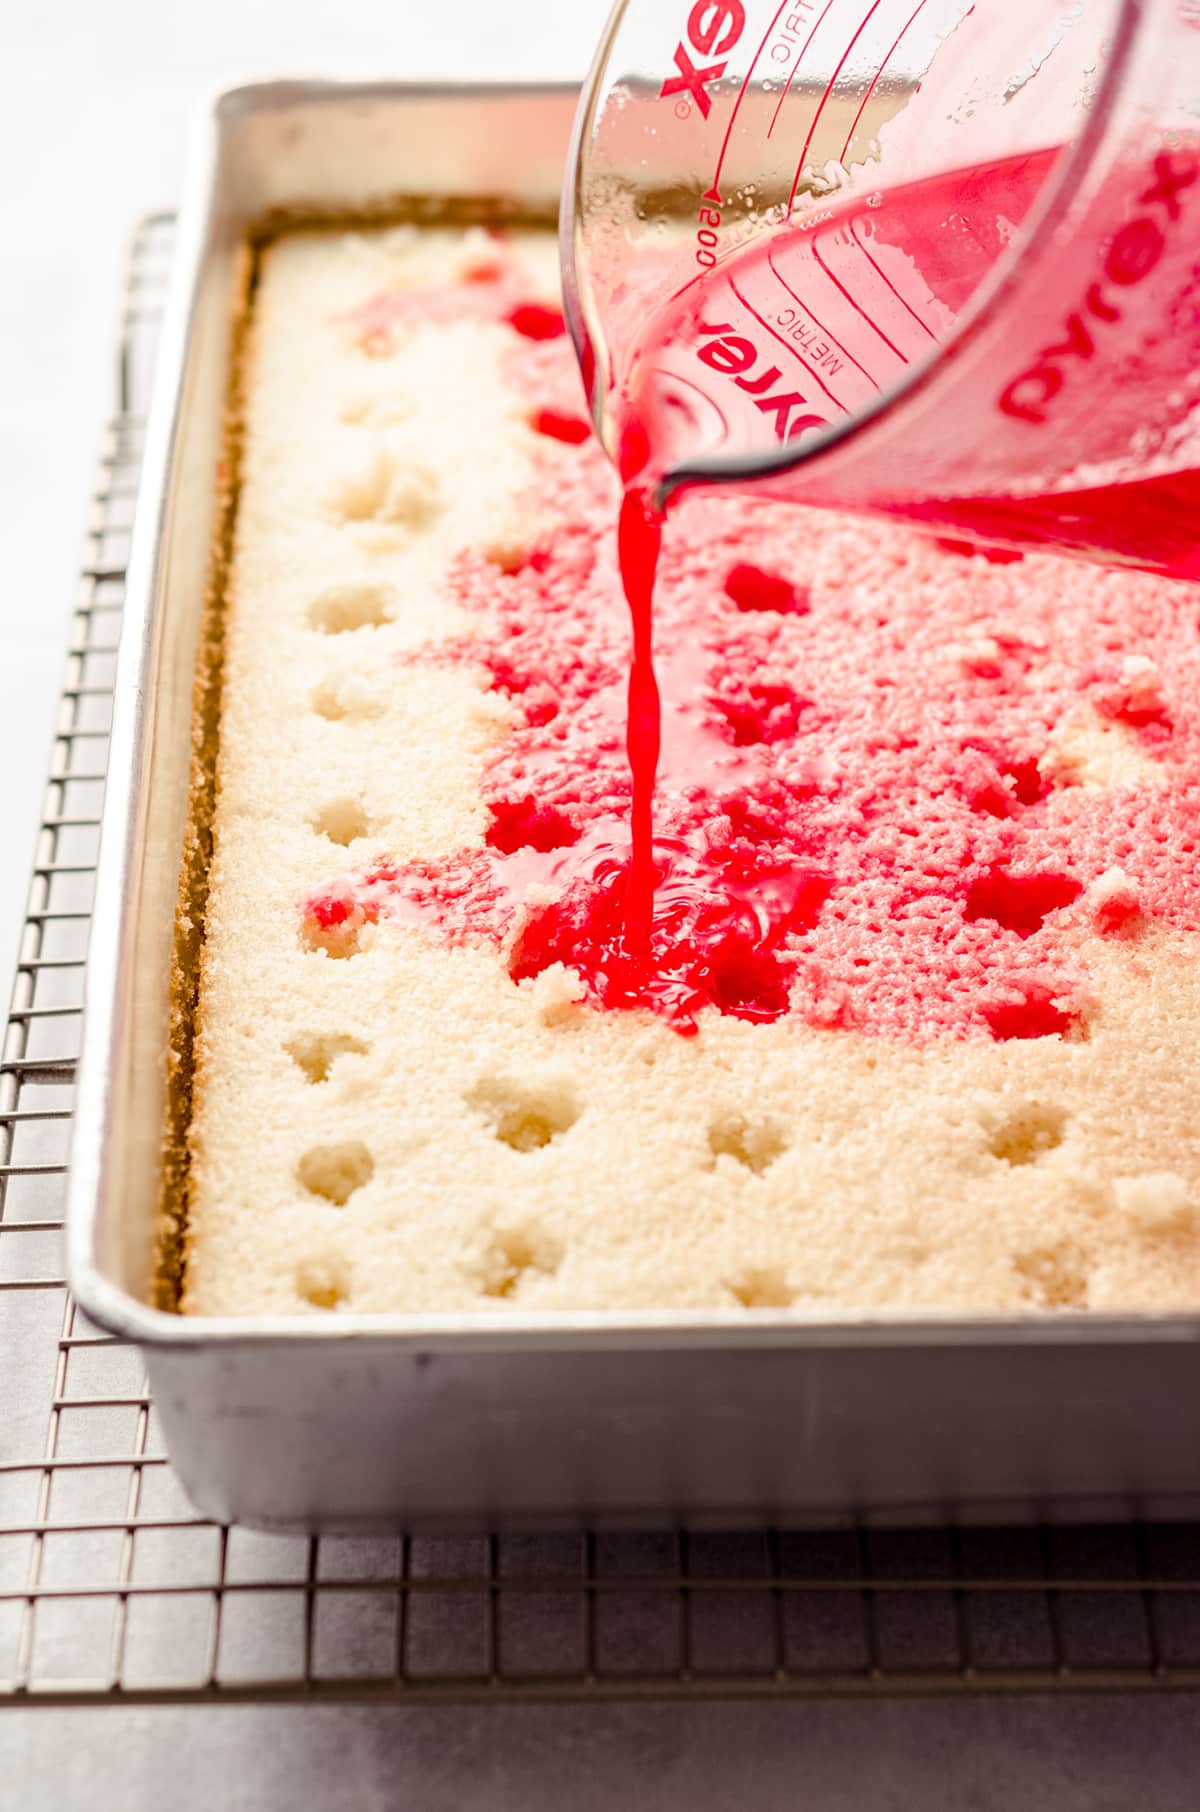 pouring strawberry jello over sheet cake to make strawberry poke cake